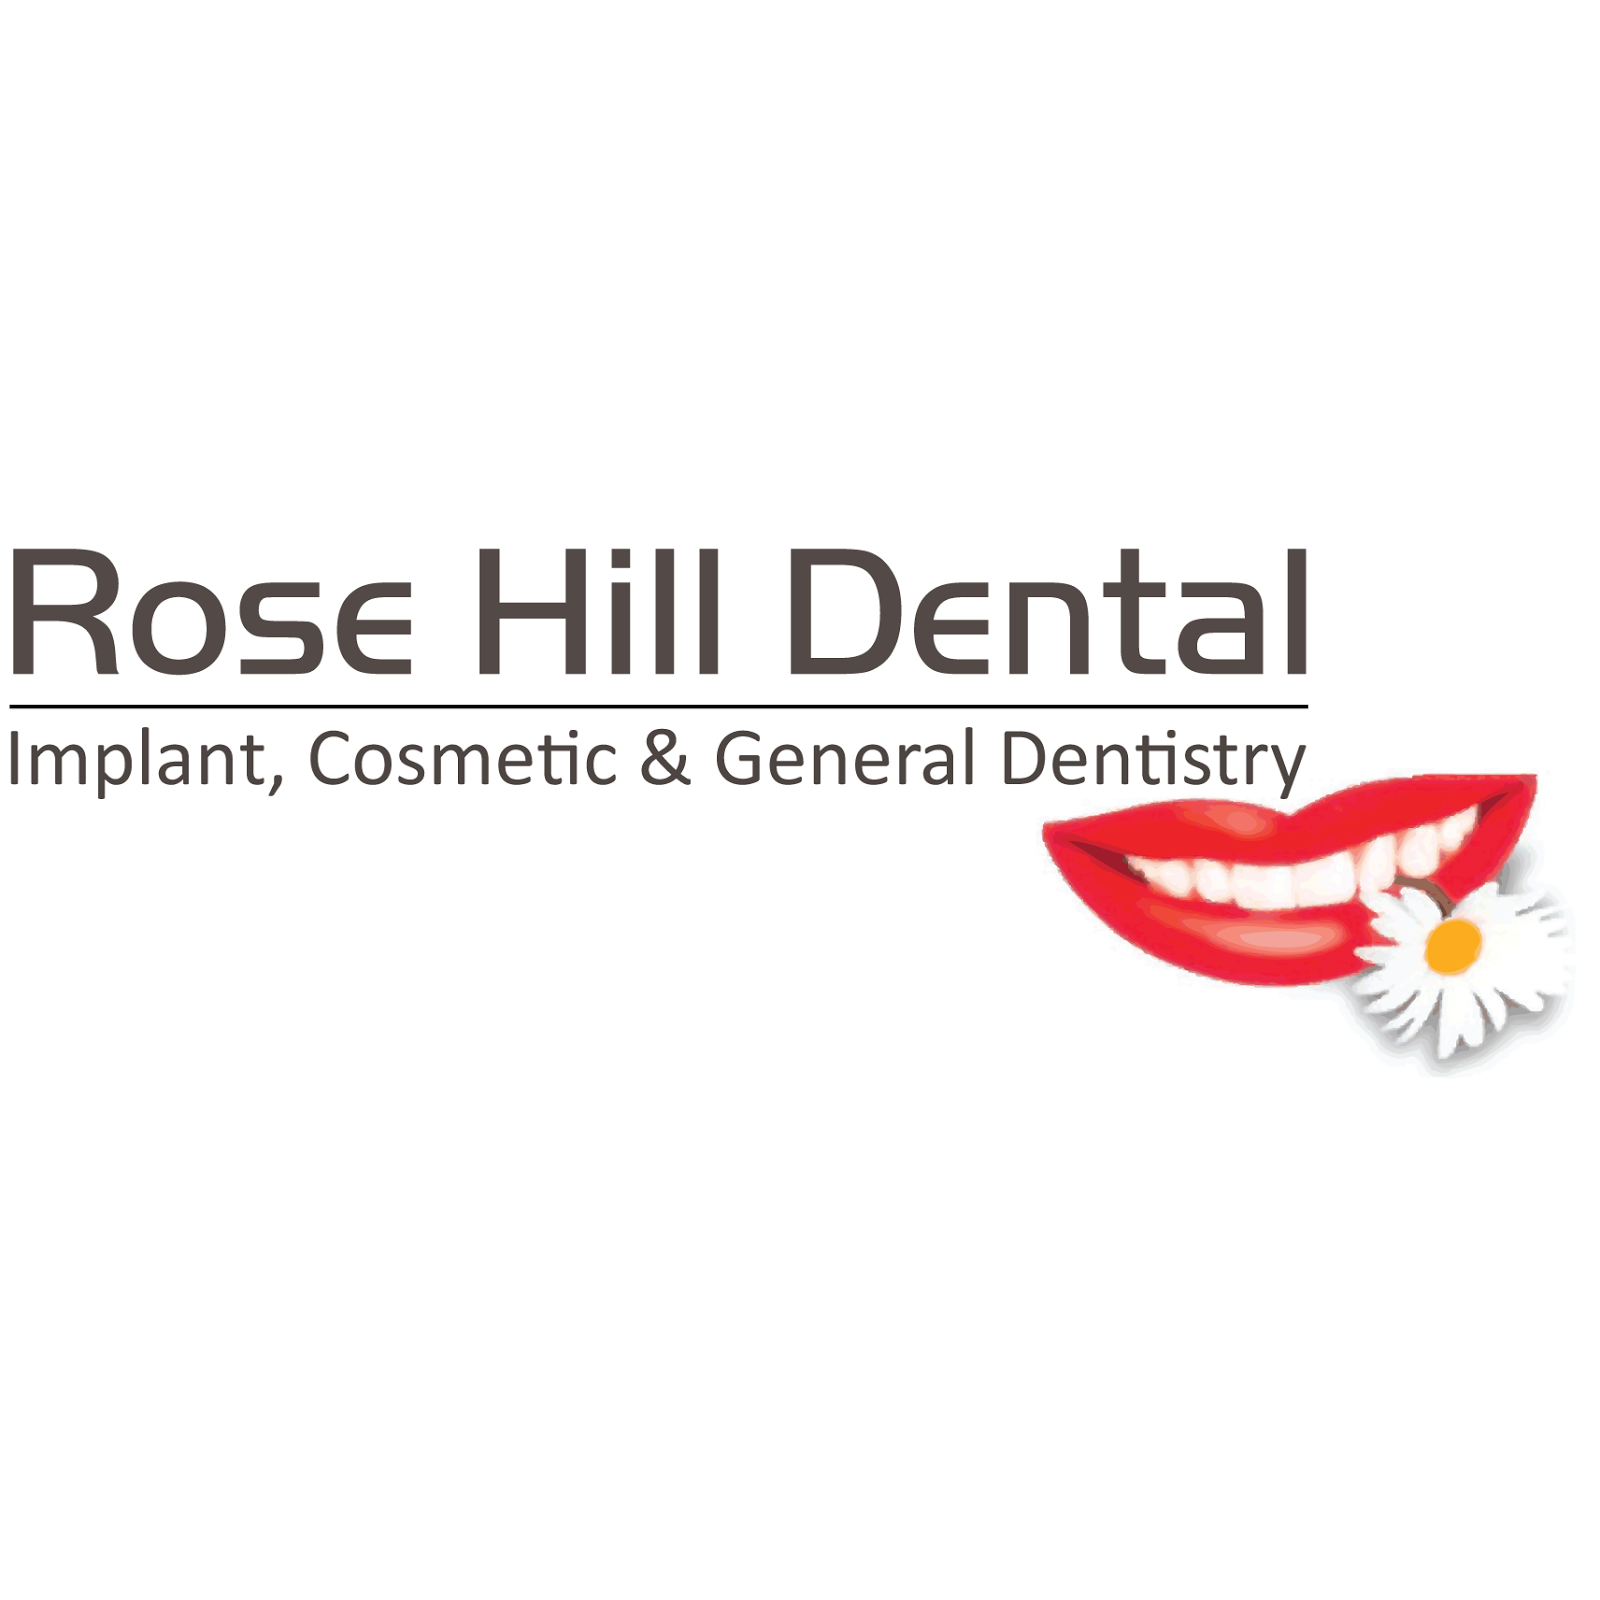 Photo of Andrea Botar D.D.S. - Rose Hill Dental - Hewlett, New York in Hewlett City, New York, United States - 4 Picture of Point of interest, Establishment, Health, Doctor, Dentist